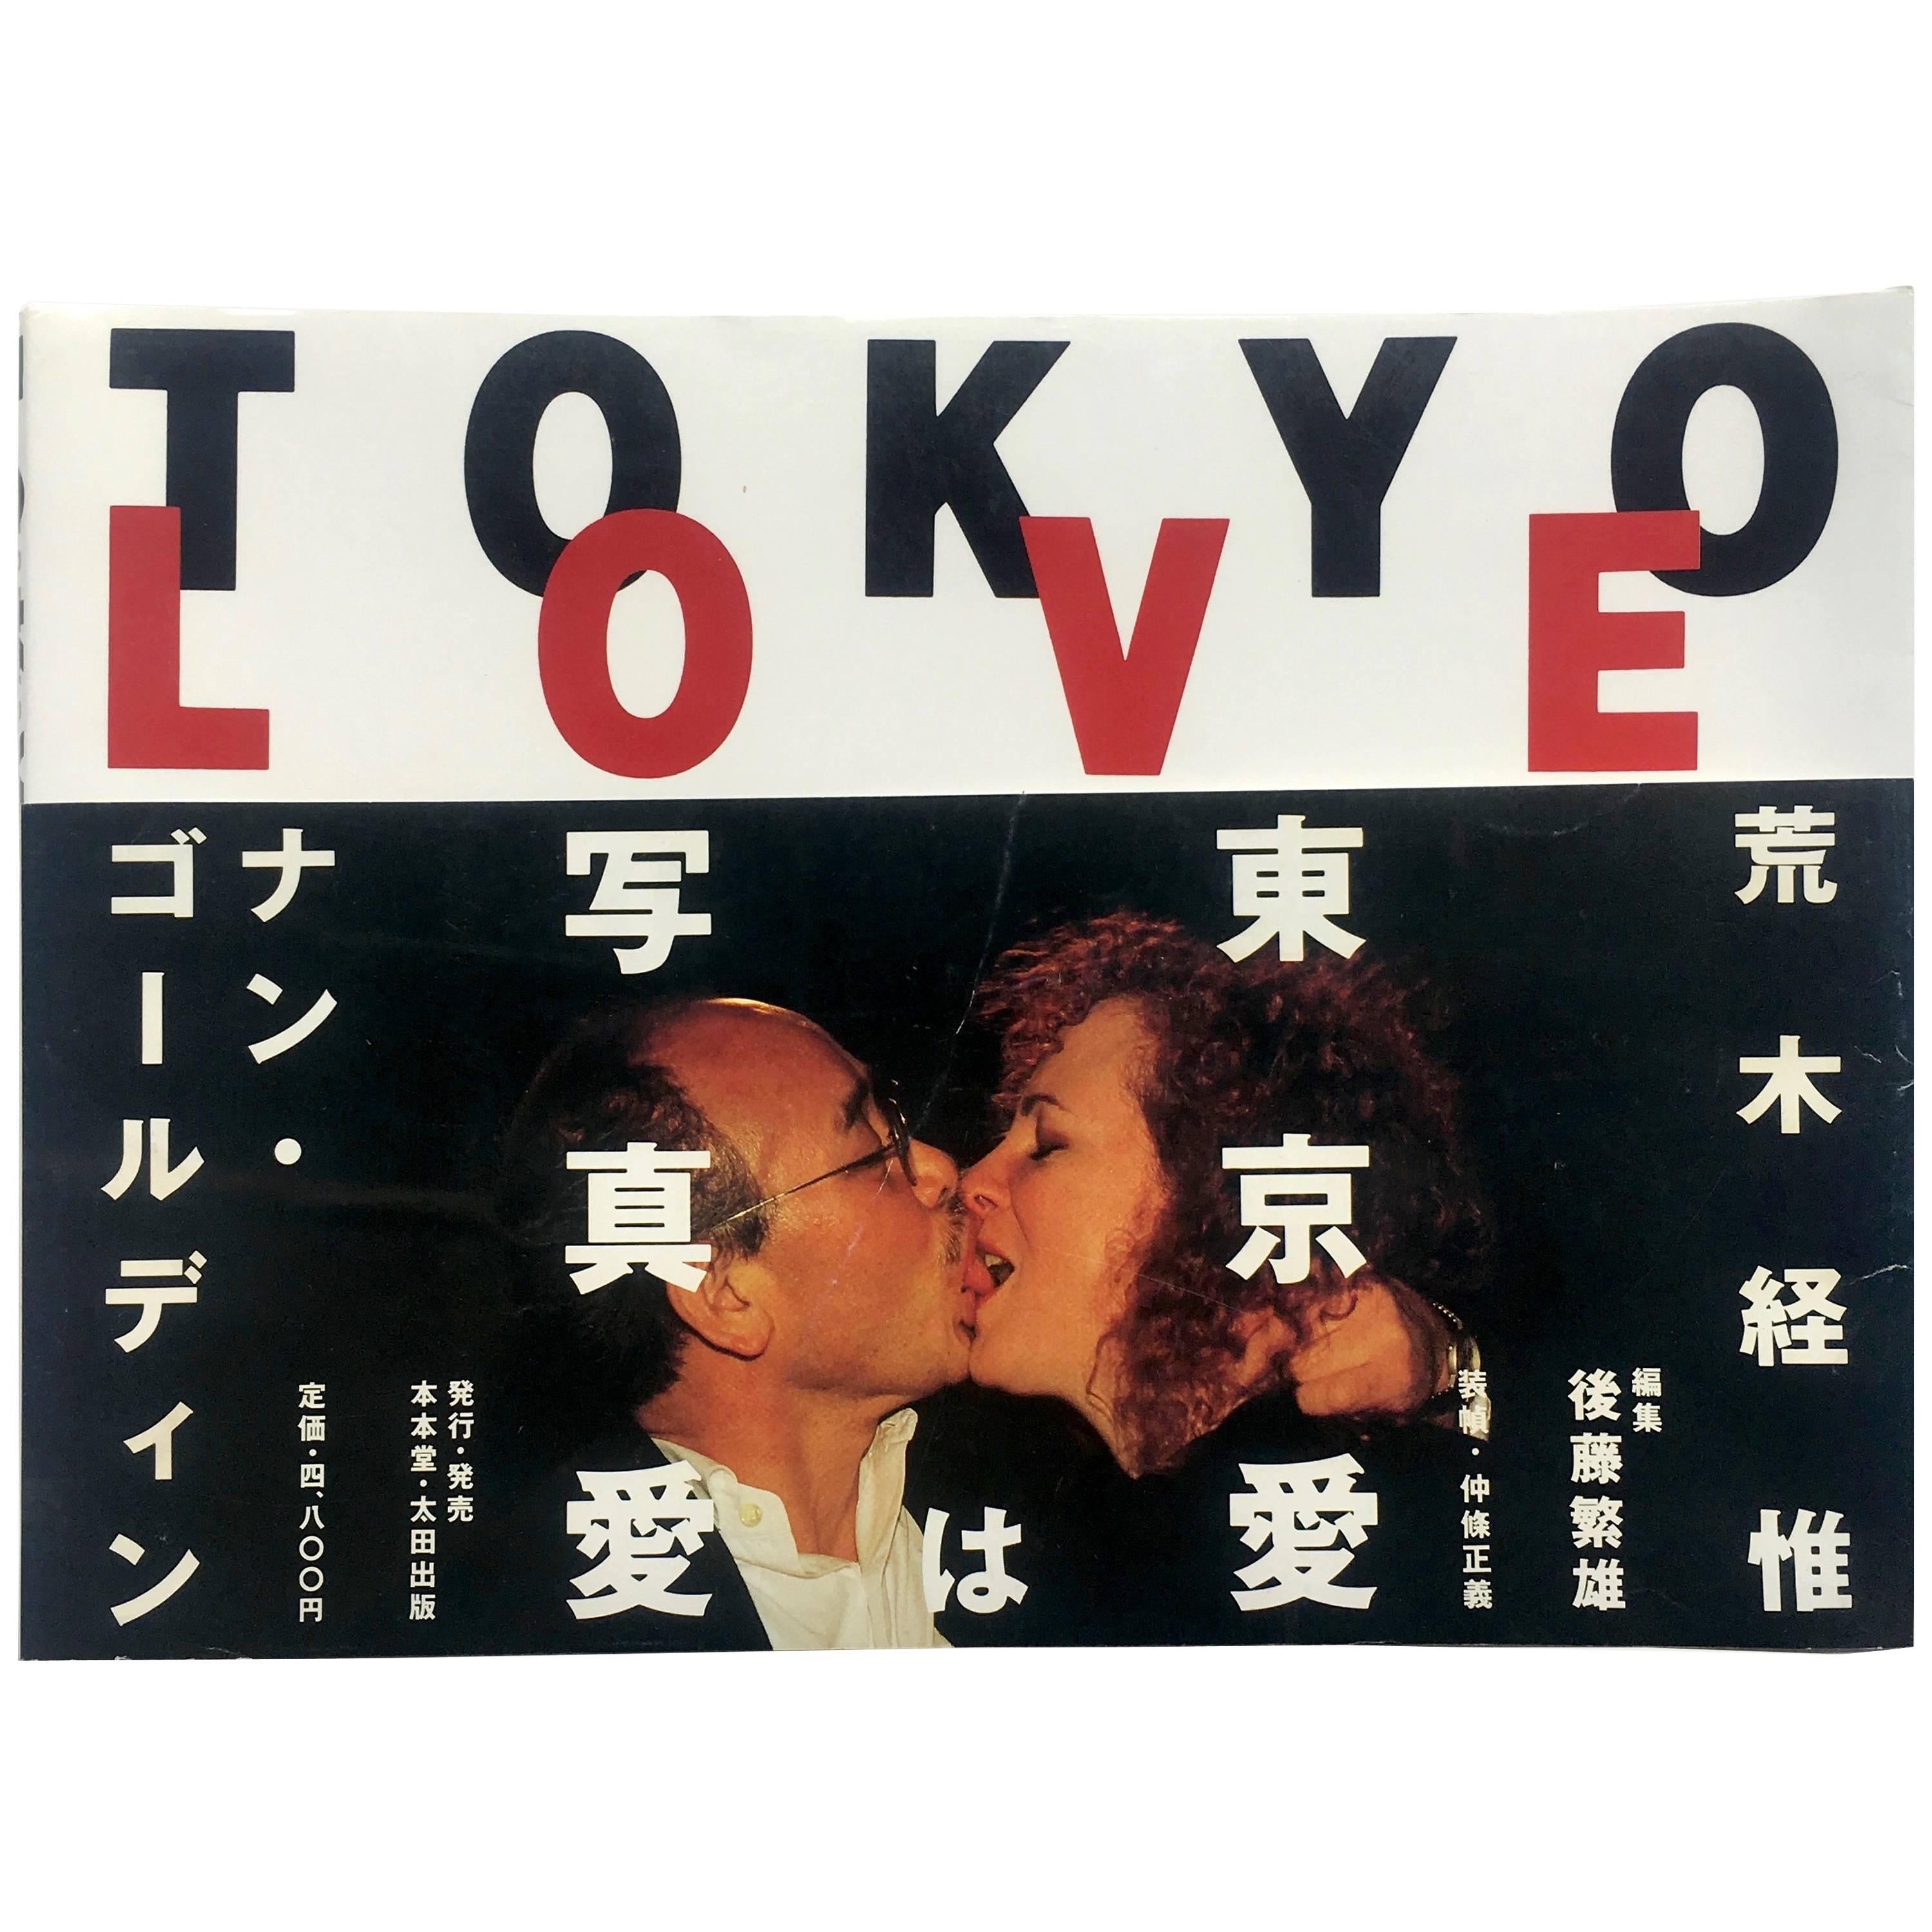 Tokyo Love - Nobuyoshi Araki & Nan Goldin 1st ed.1994 